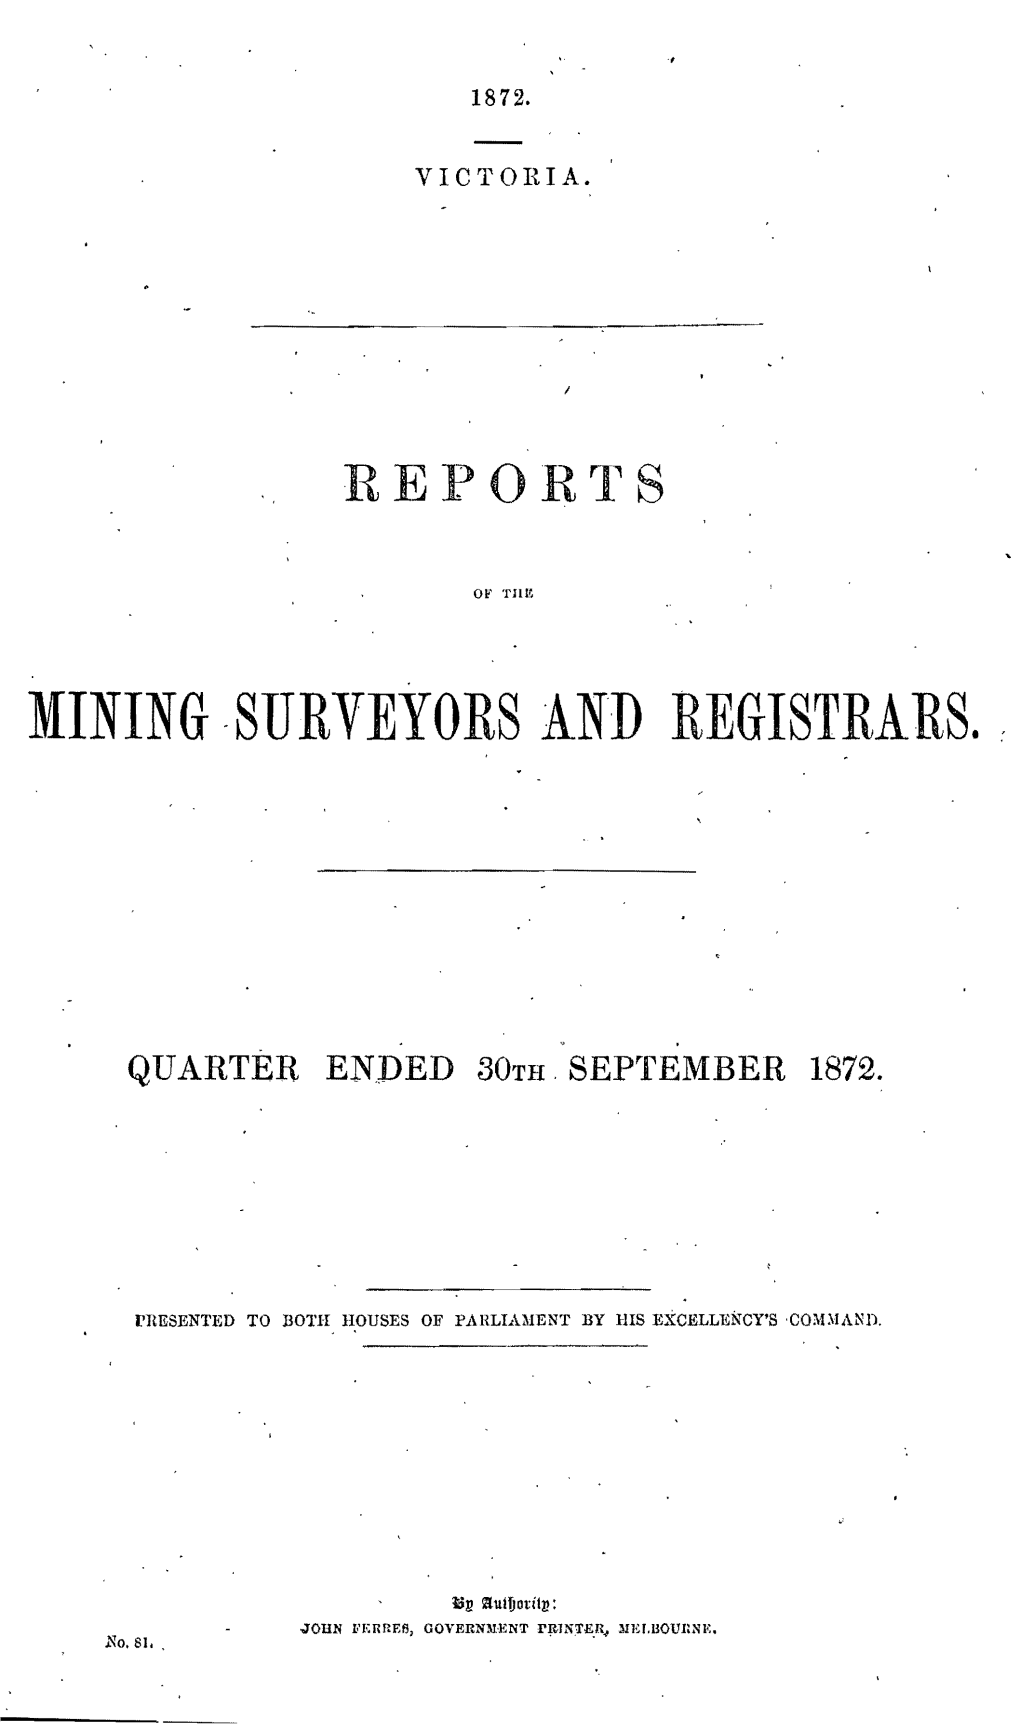 Mining -Surveyors and Registrars